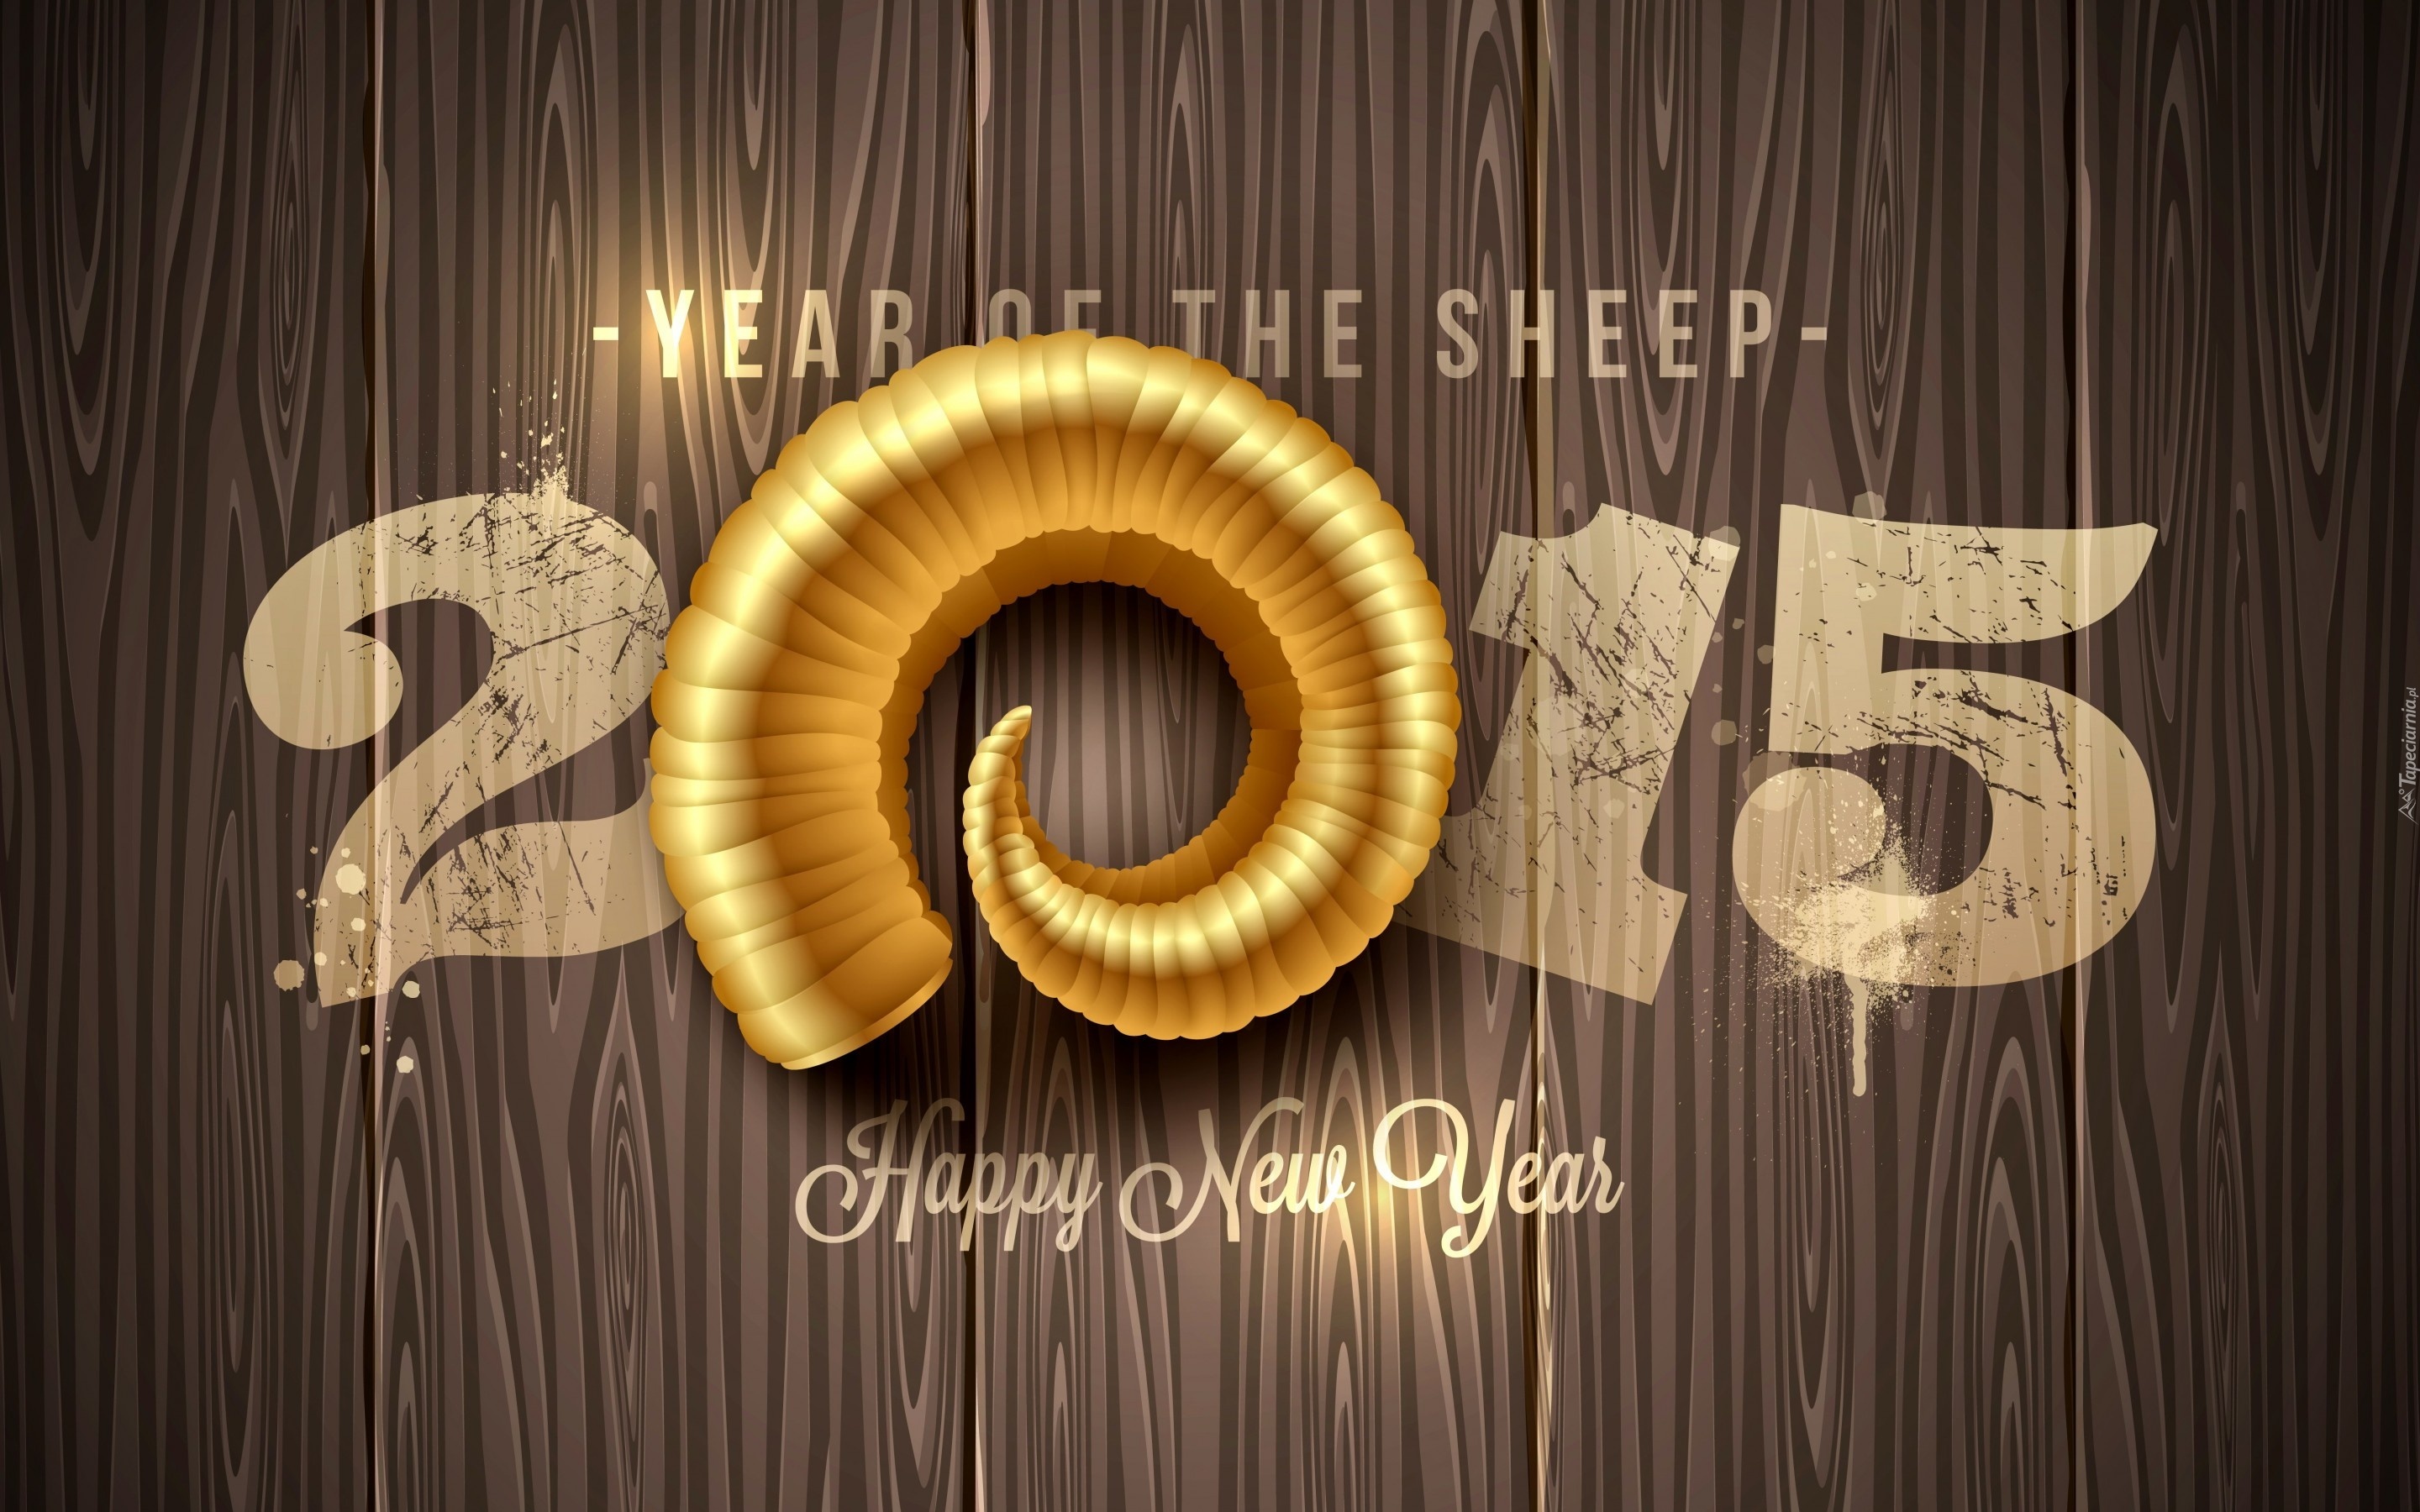 2015, Happy New Year